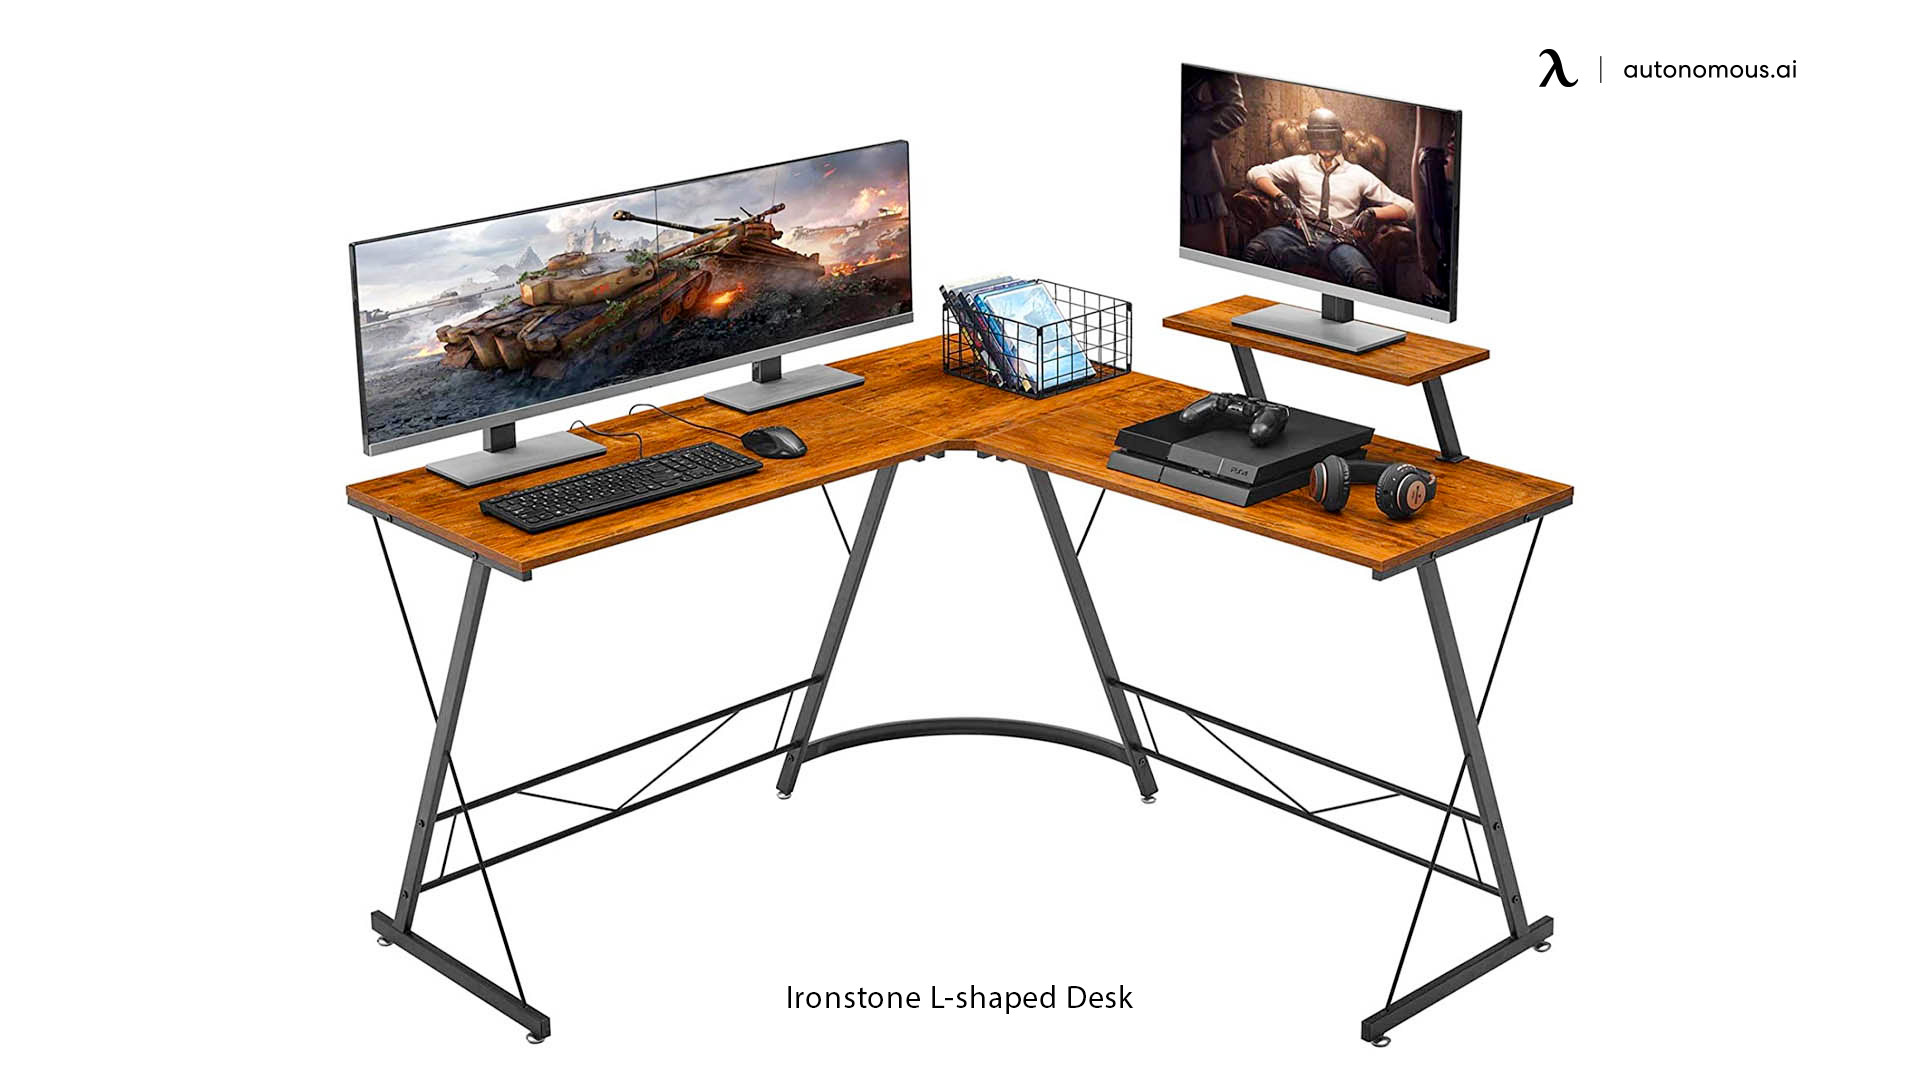 Ironstone L-shaped Desk